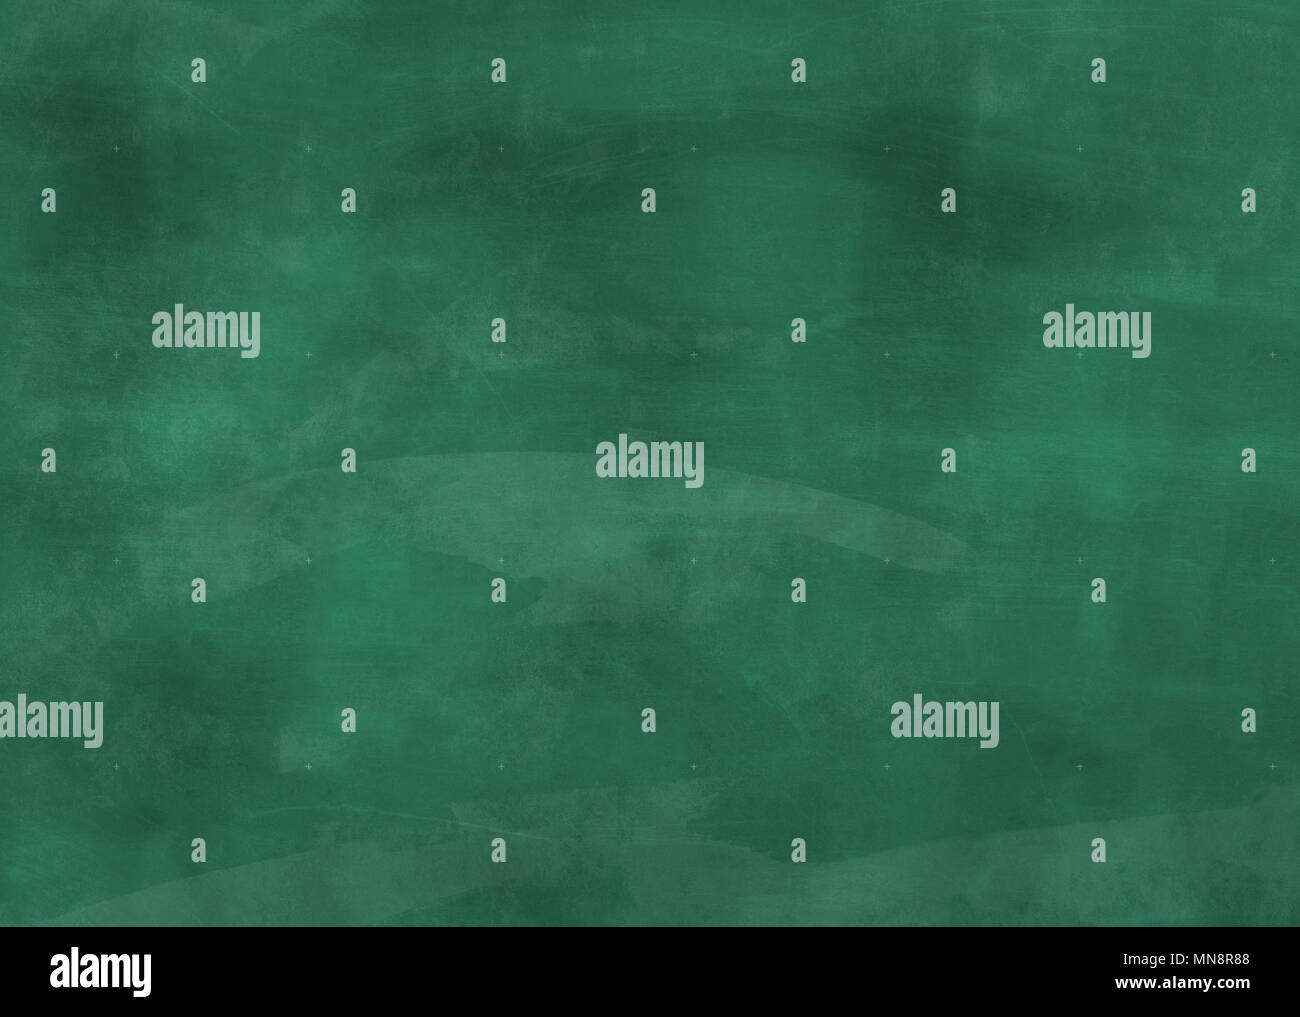 empty green chalkboard background Stock Photo